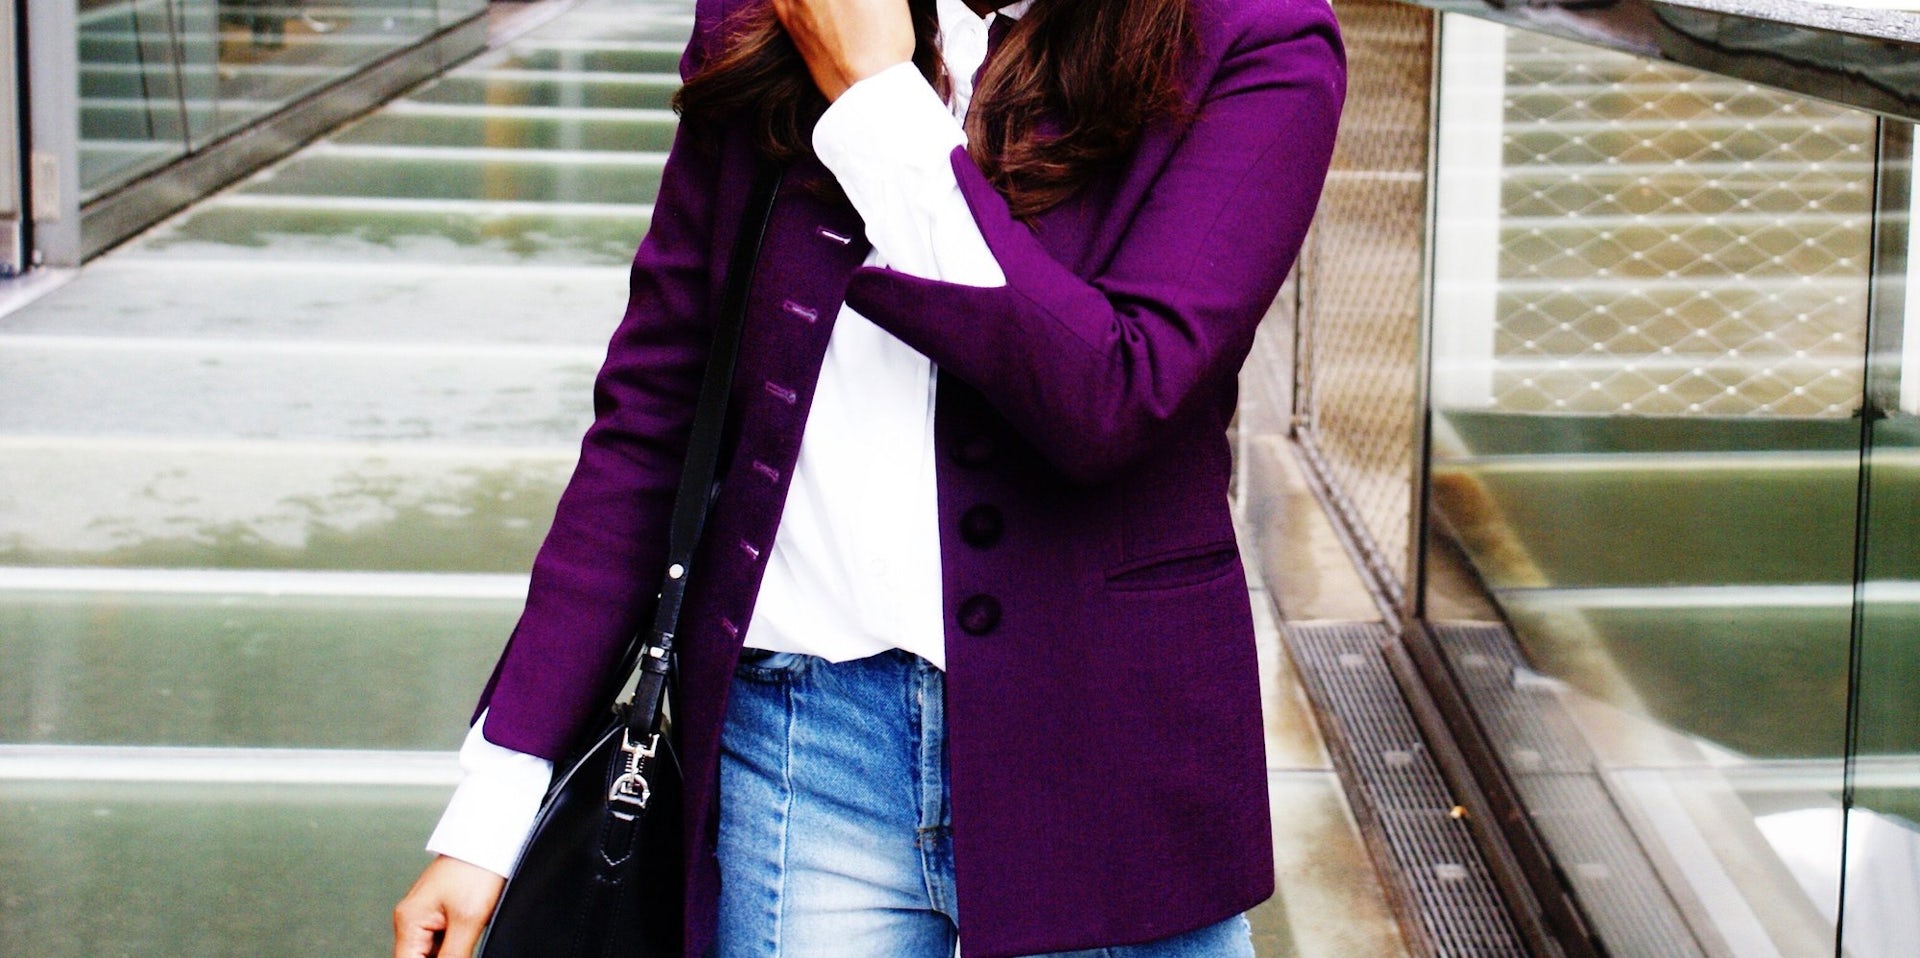 Sachini wearing a purple Dior vintage jacket